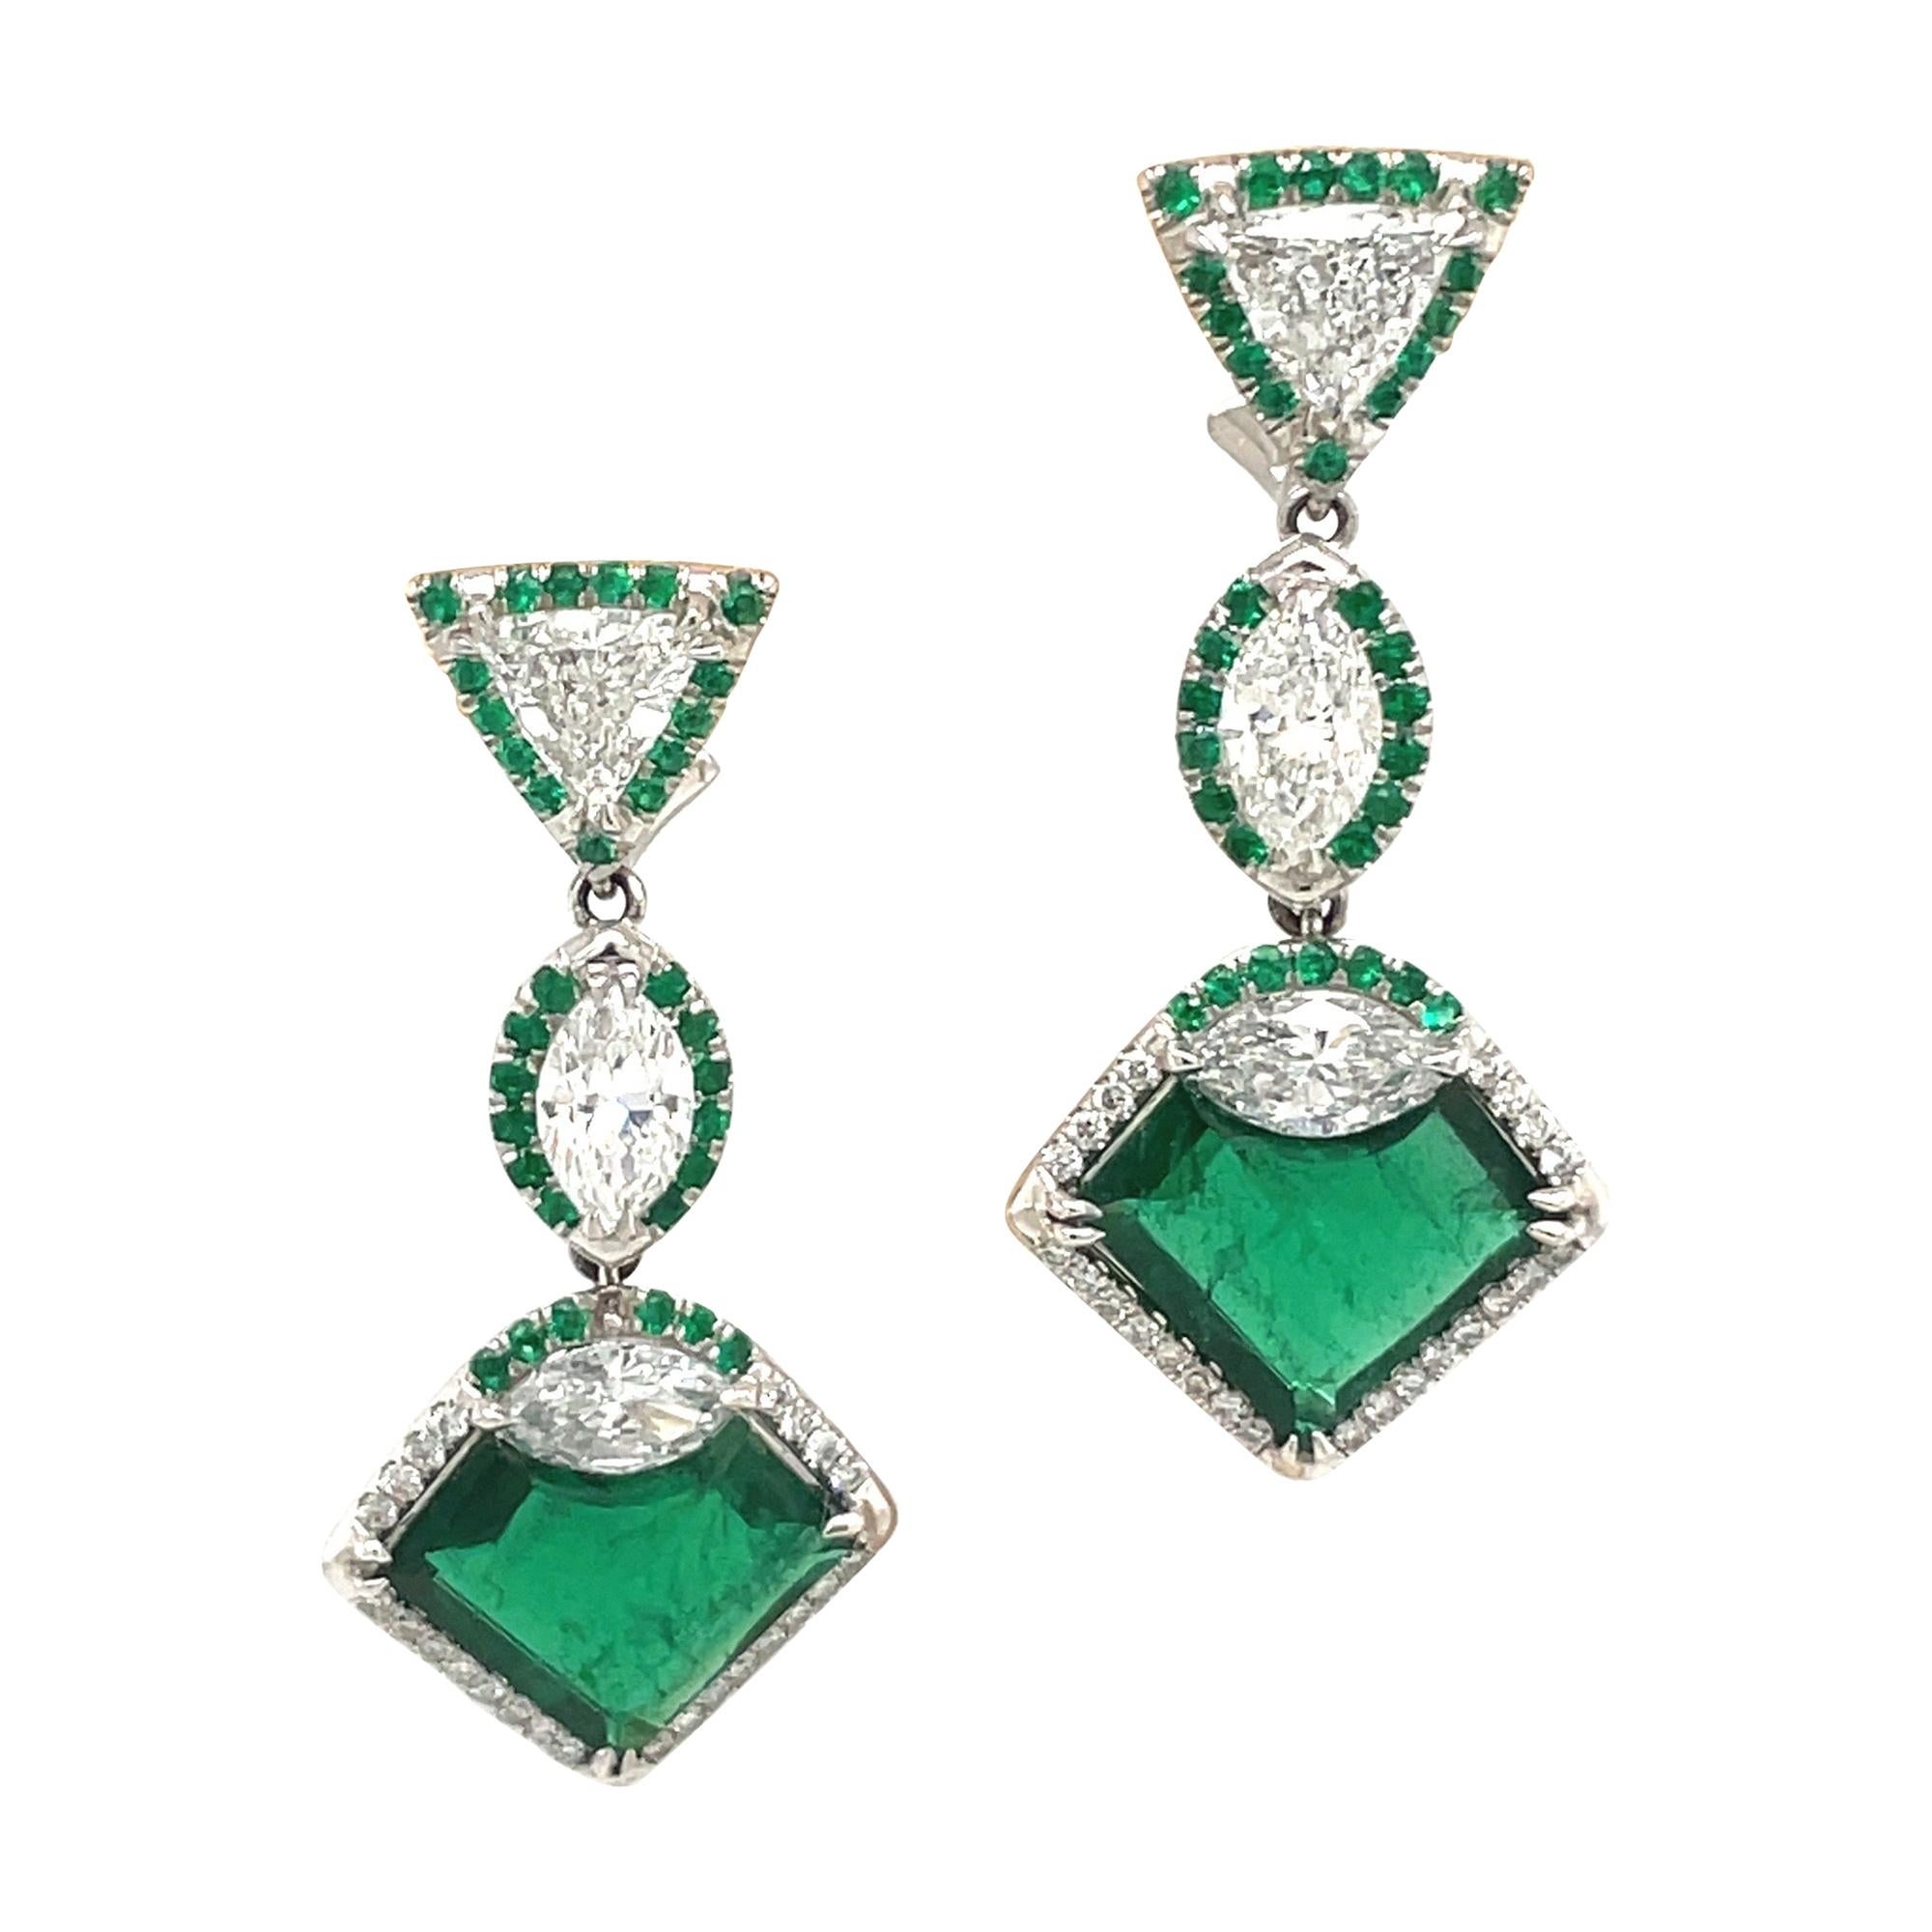 Plat/18kt Gold, 6.74ct. Gem Quality, Heart Emerald & 11.31ct. Diamond Earrings